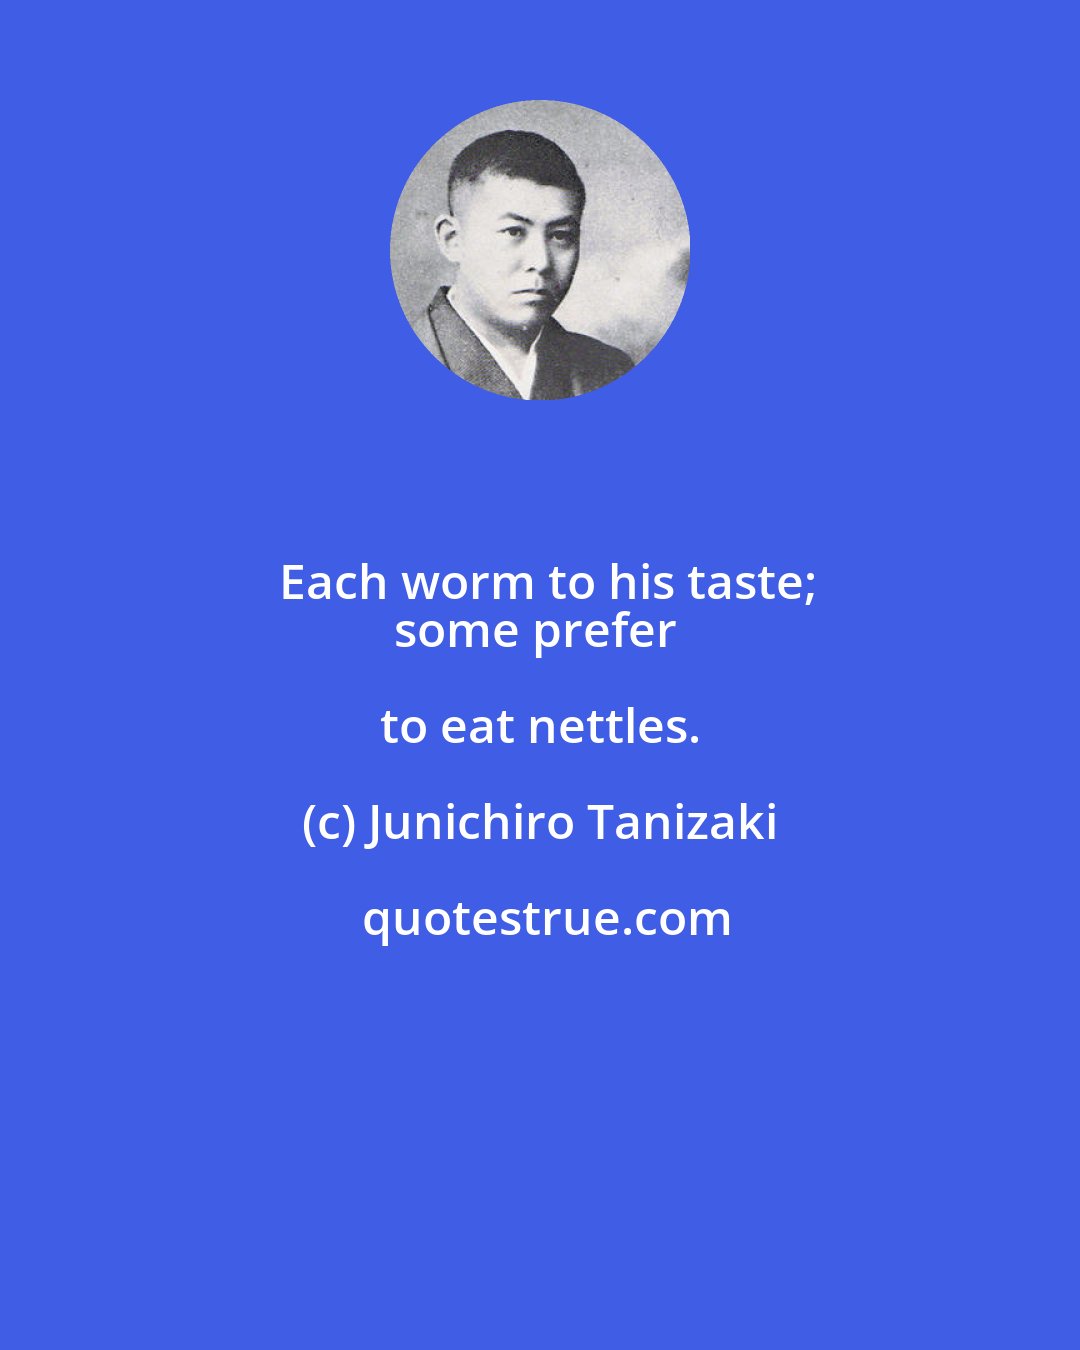 Junichiro Tanizaki: Each worm to his taste;
some prefer to eat nettles.